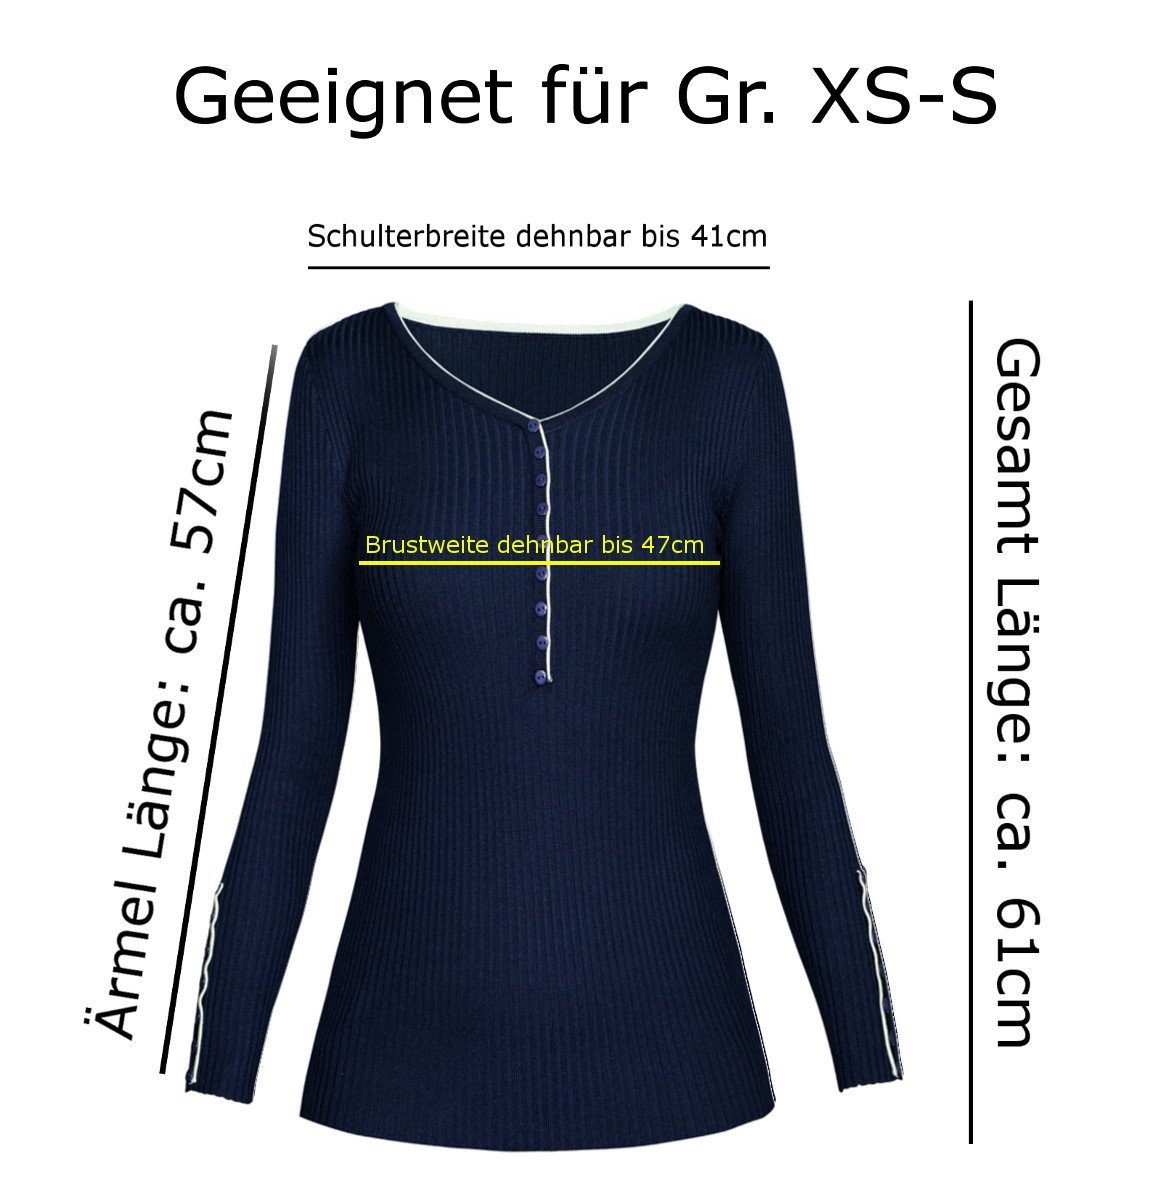 V-Ausschnitt Enganliegend Rippenstrick Pulli dy_mode in PUL001-Schwarz mit Unifarbe Damen Pullover V-Ausschnitt-Pullover